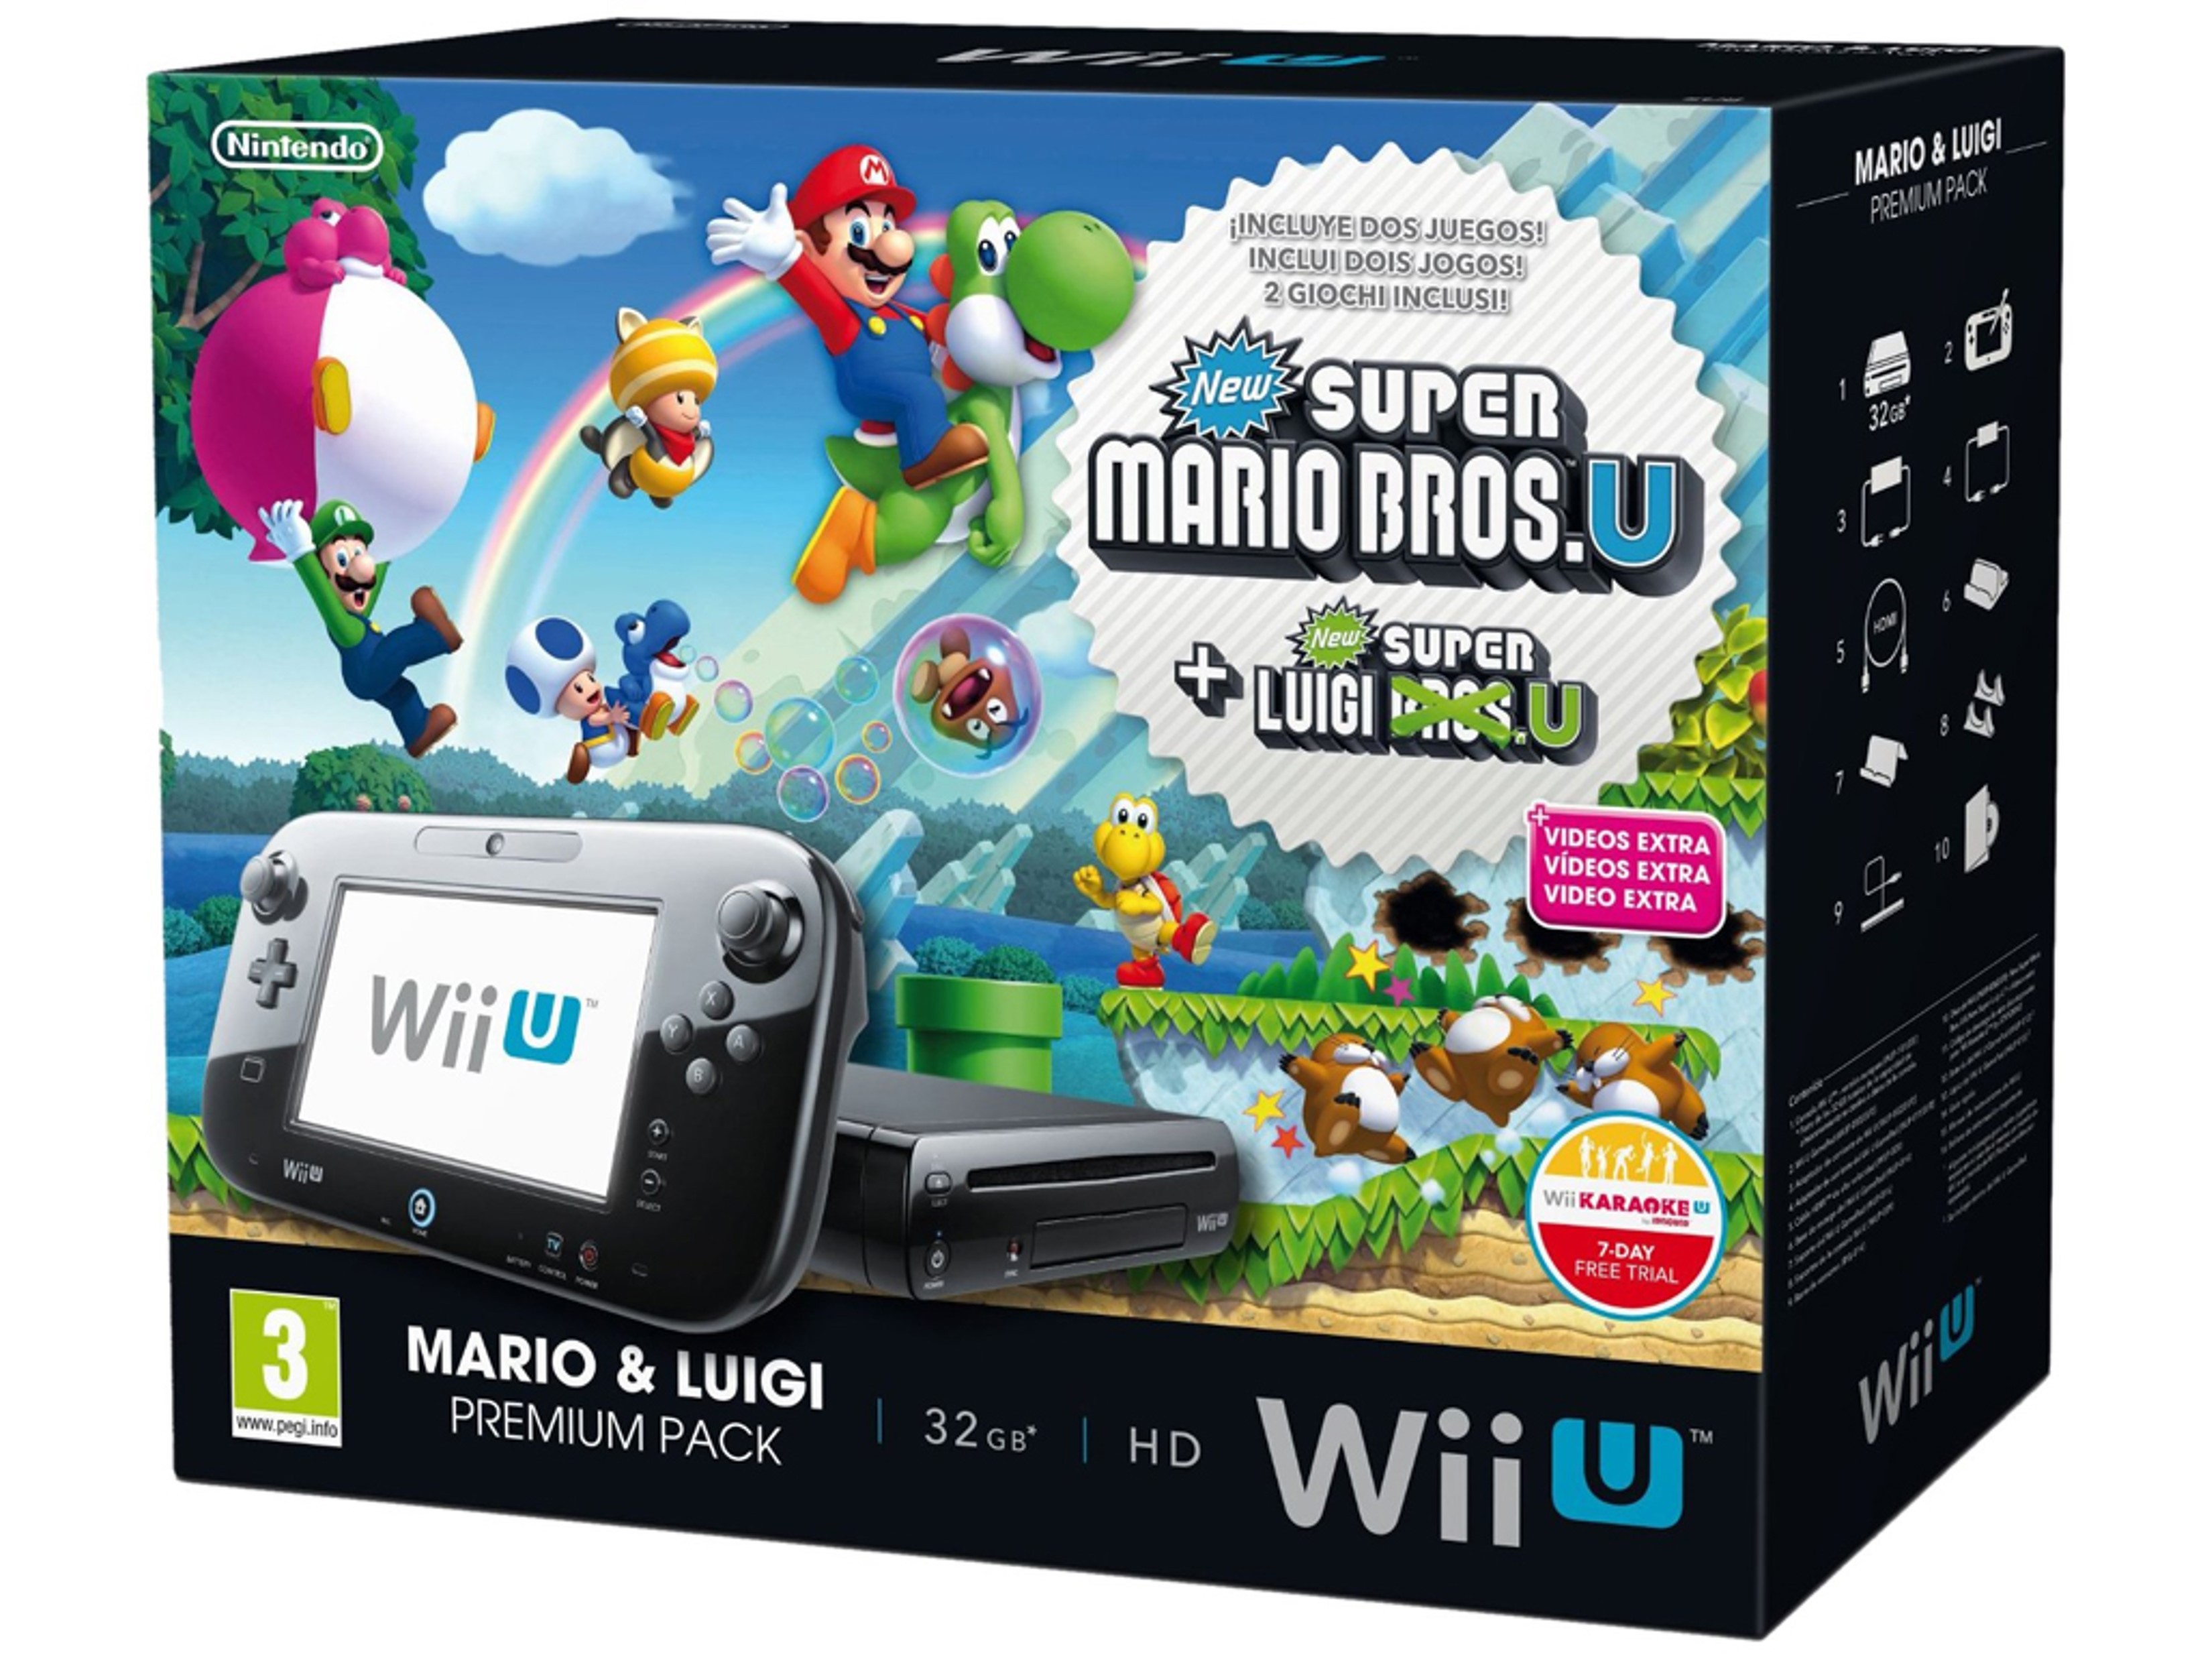 Nintendo Wii U Starter Pack - New Super Mario Bros. U + New Super Luigi U Edition [Complete] Kopen | Wii U Hardware